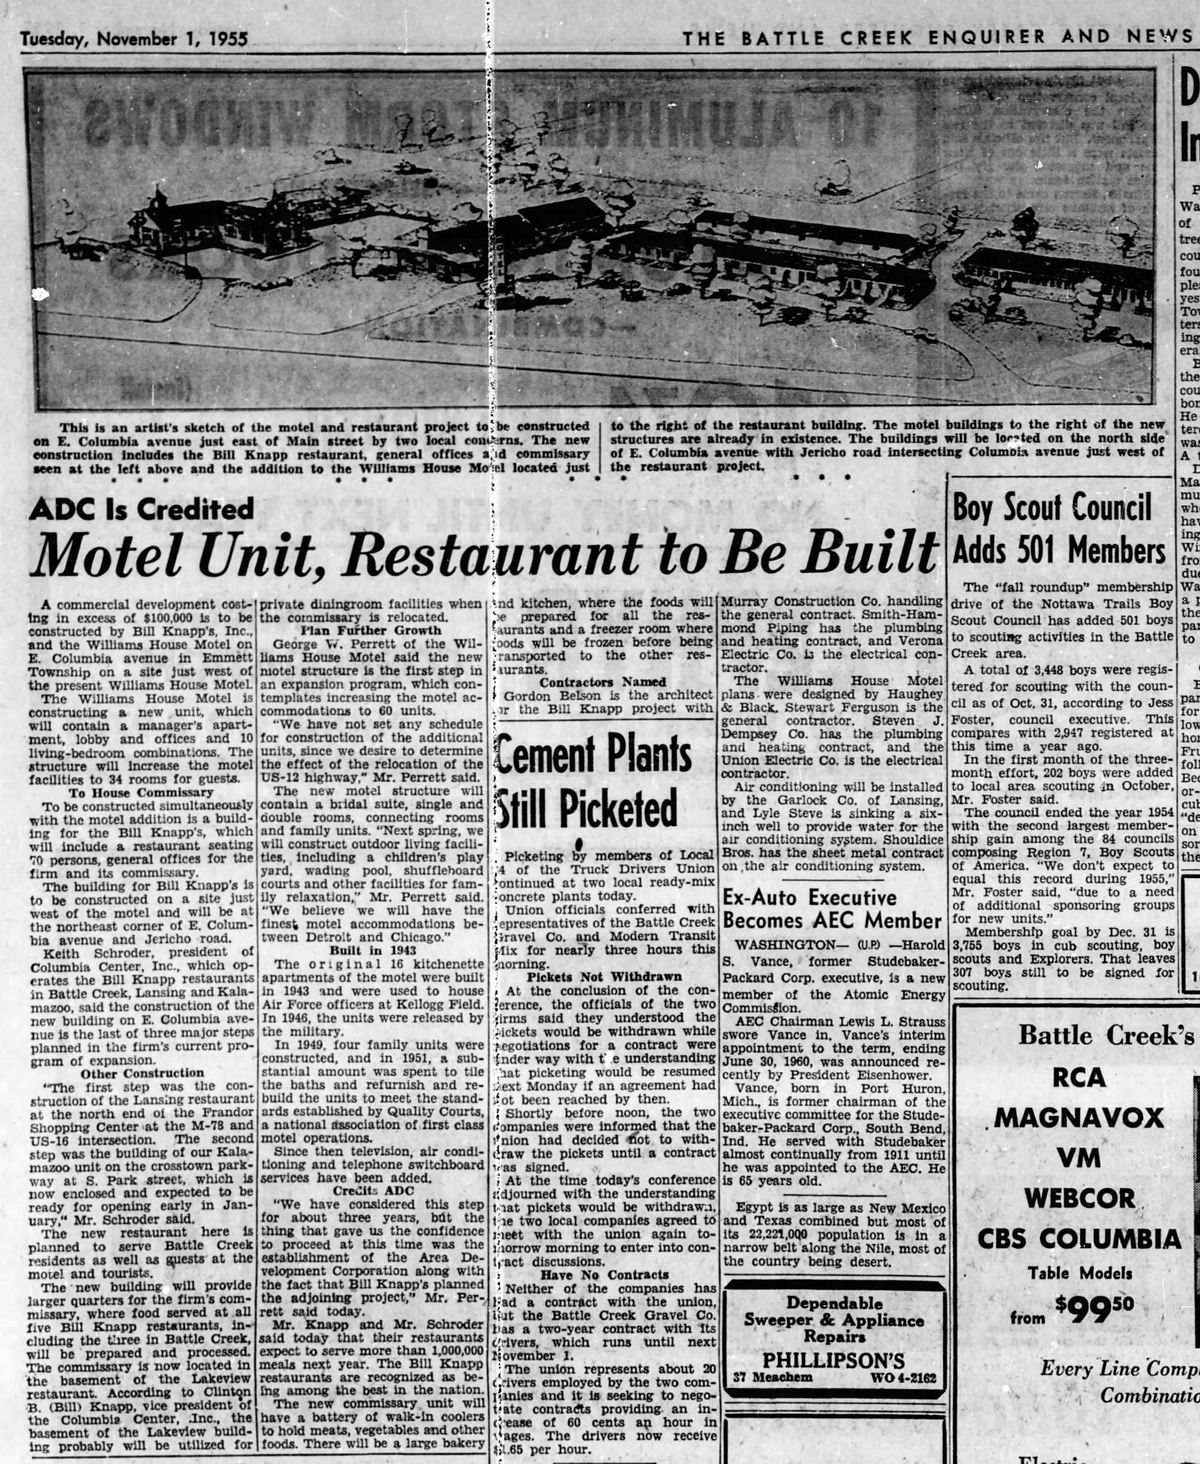 Williams House Motel - Nov 1 1955 Article